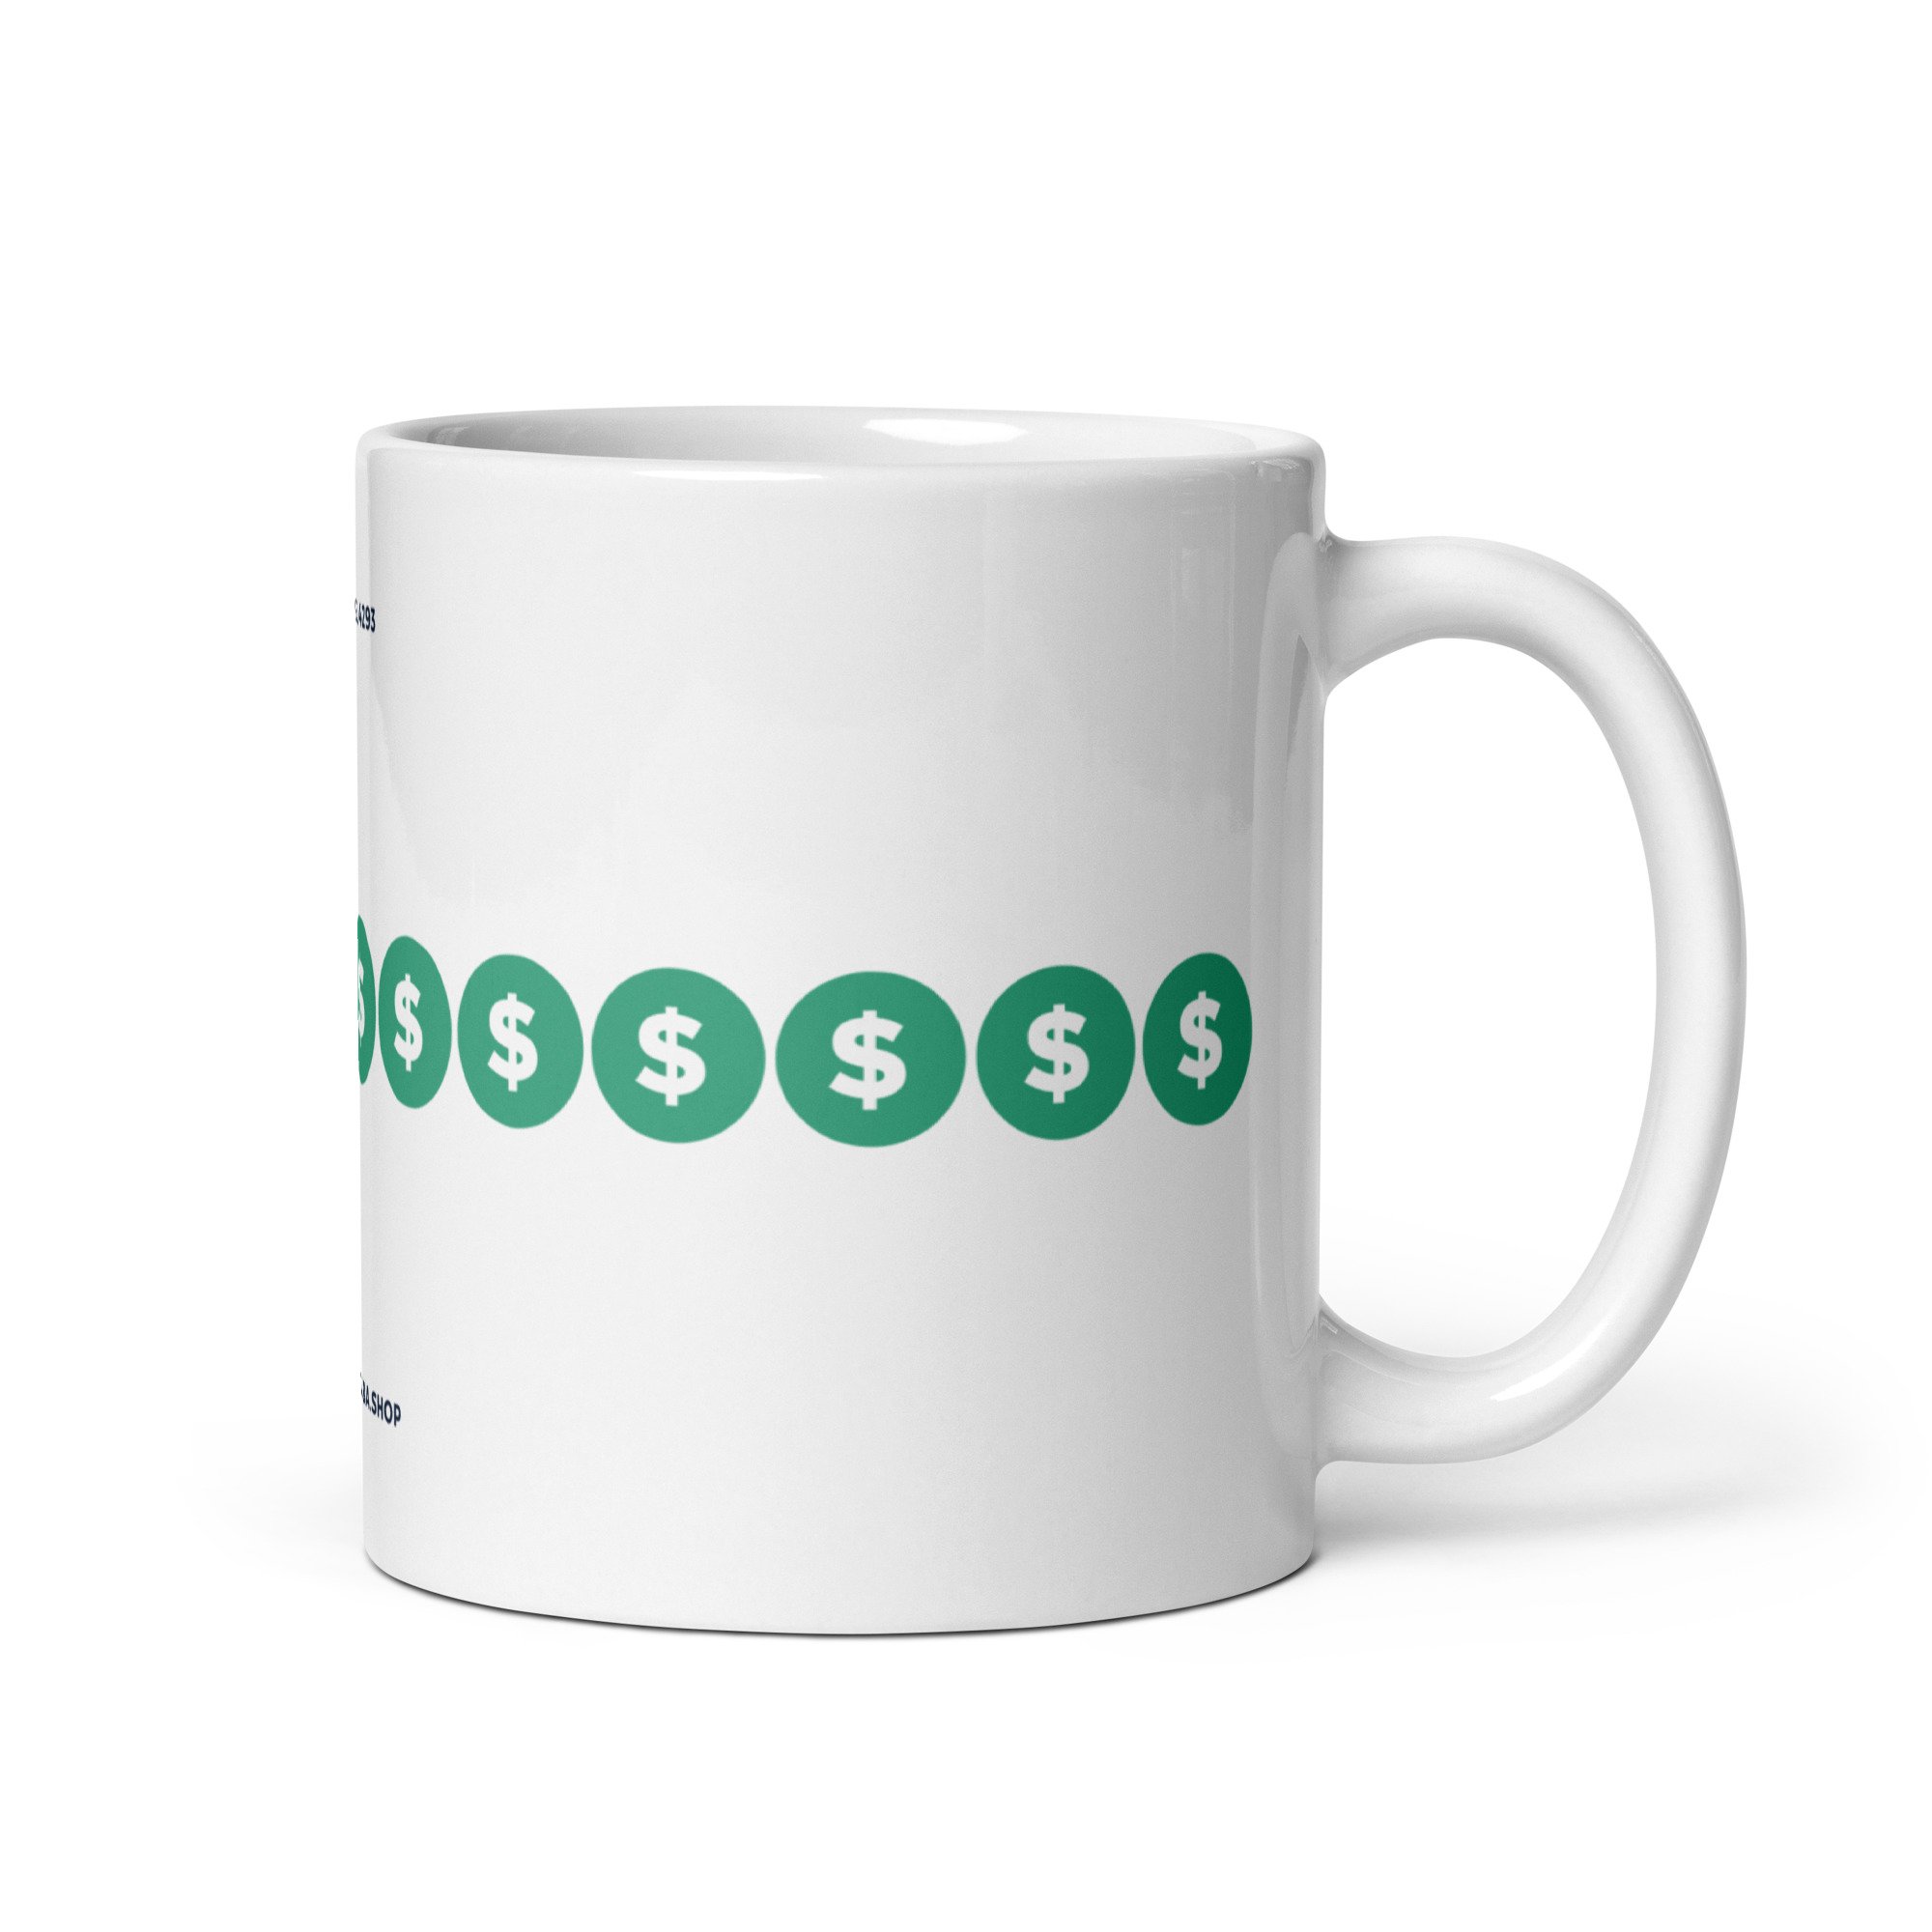 white-glossy-mug-11oz-handle-on-right-6363ff9bd26d9.jpg